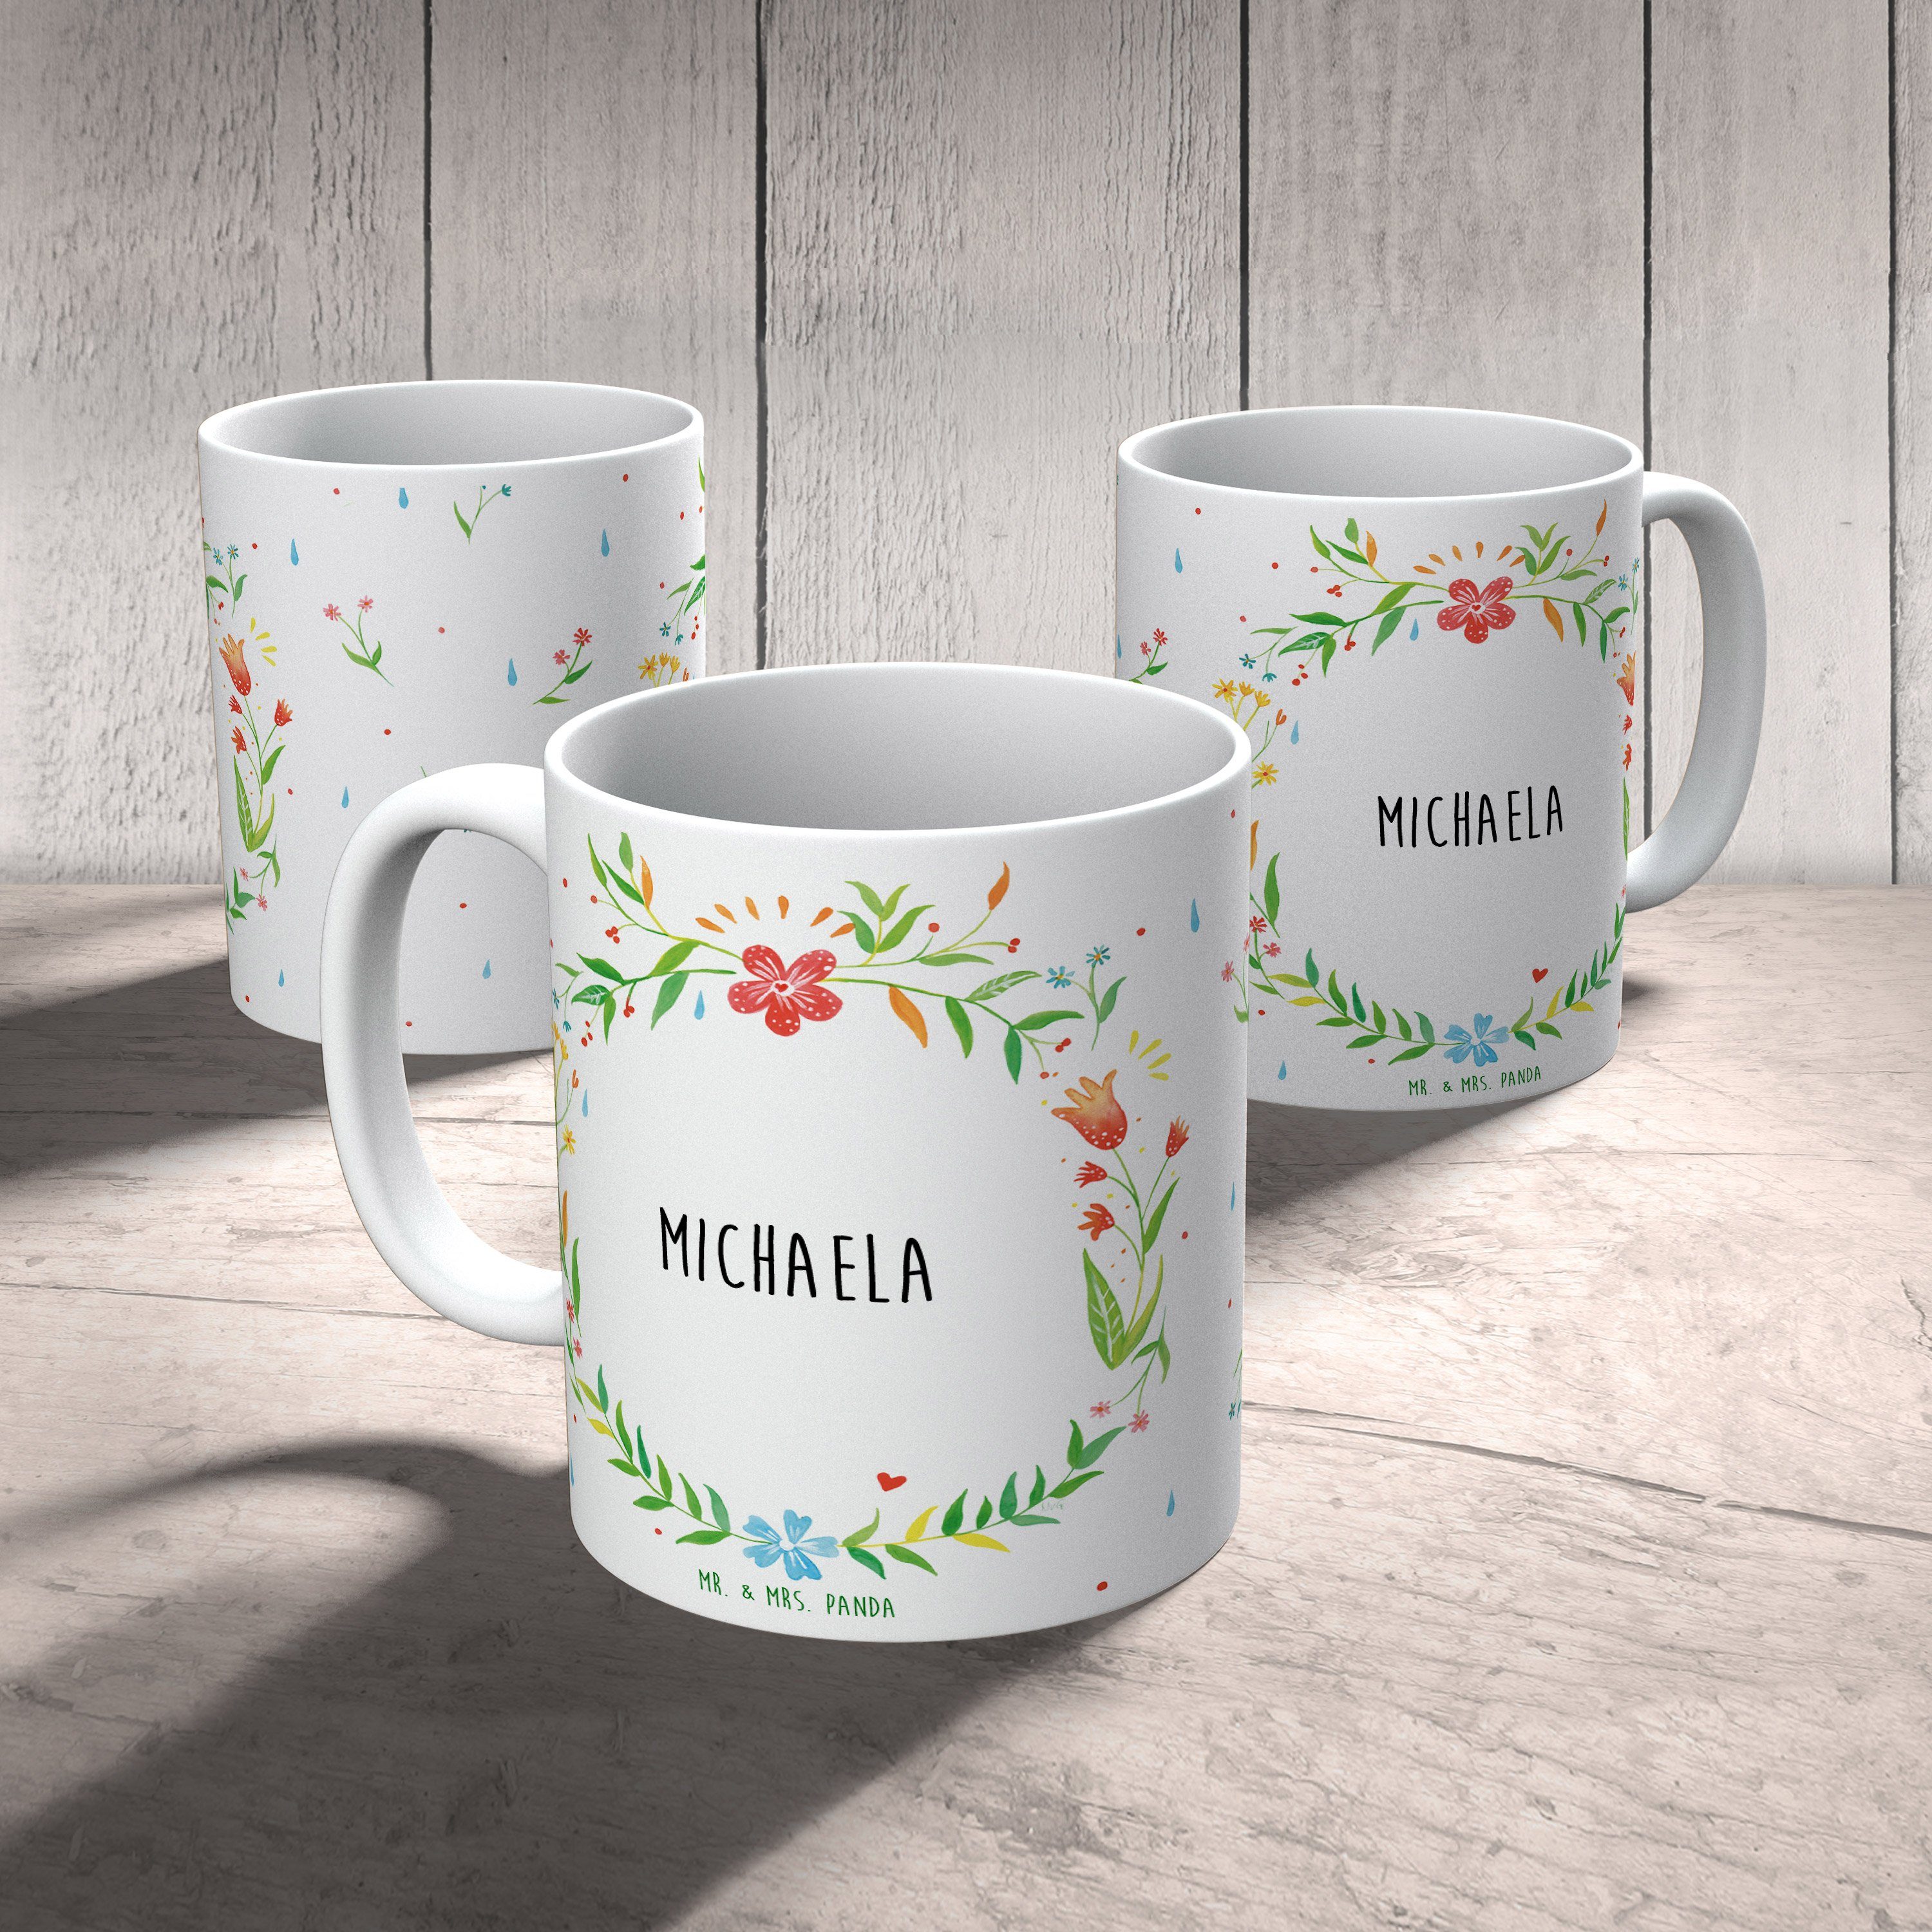 Mr. & Mrs. Panda Tasse Kaffeetasse, Michaela Sprüche, Geschenk, Keramiktasse, Gesche, - Tasse Keramik